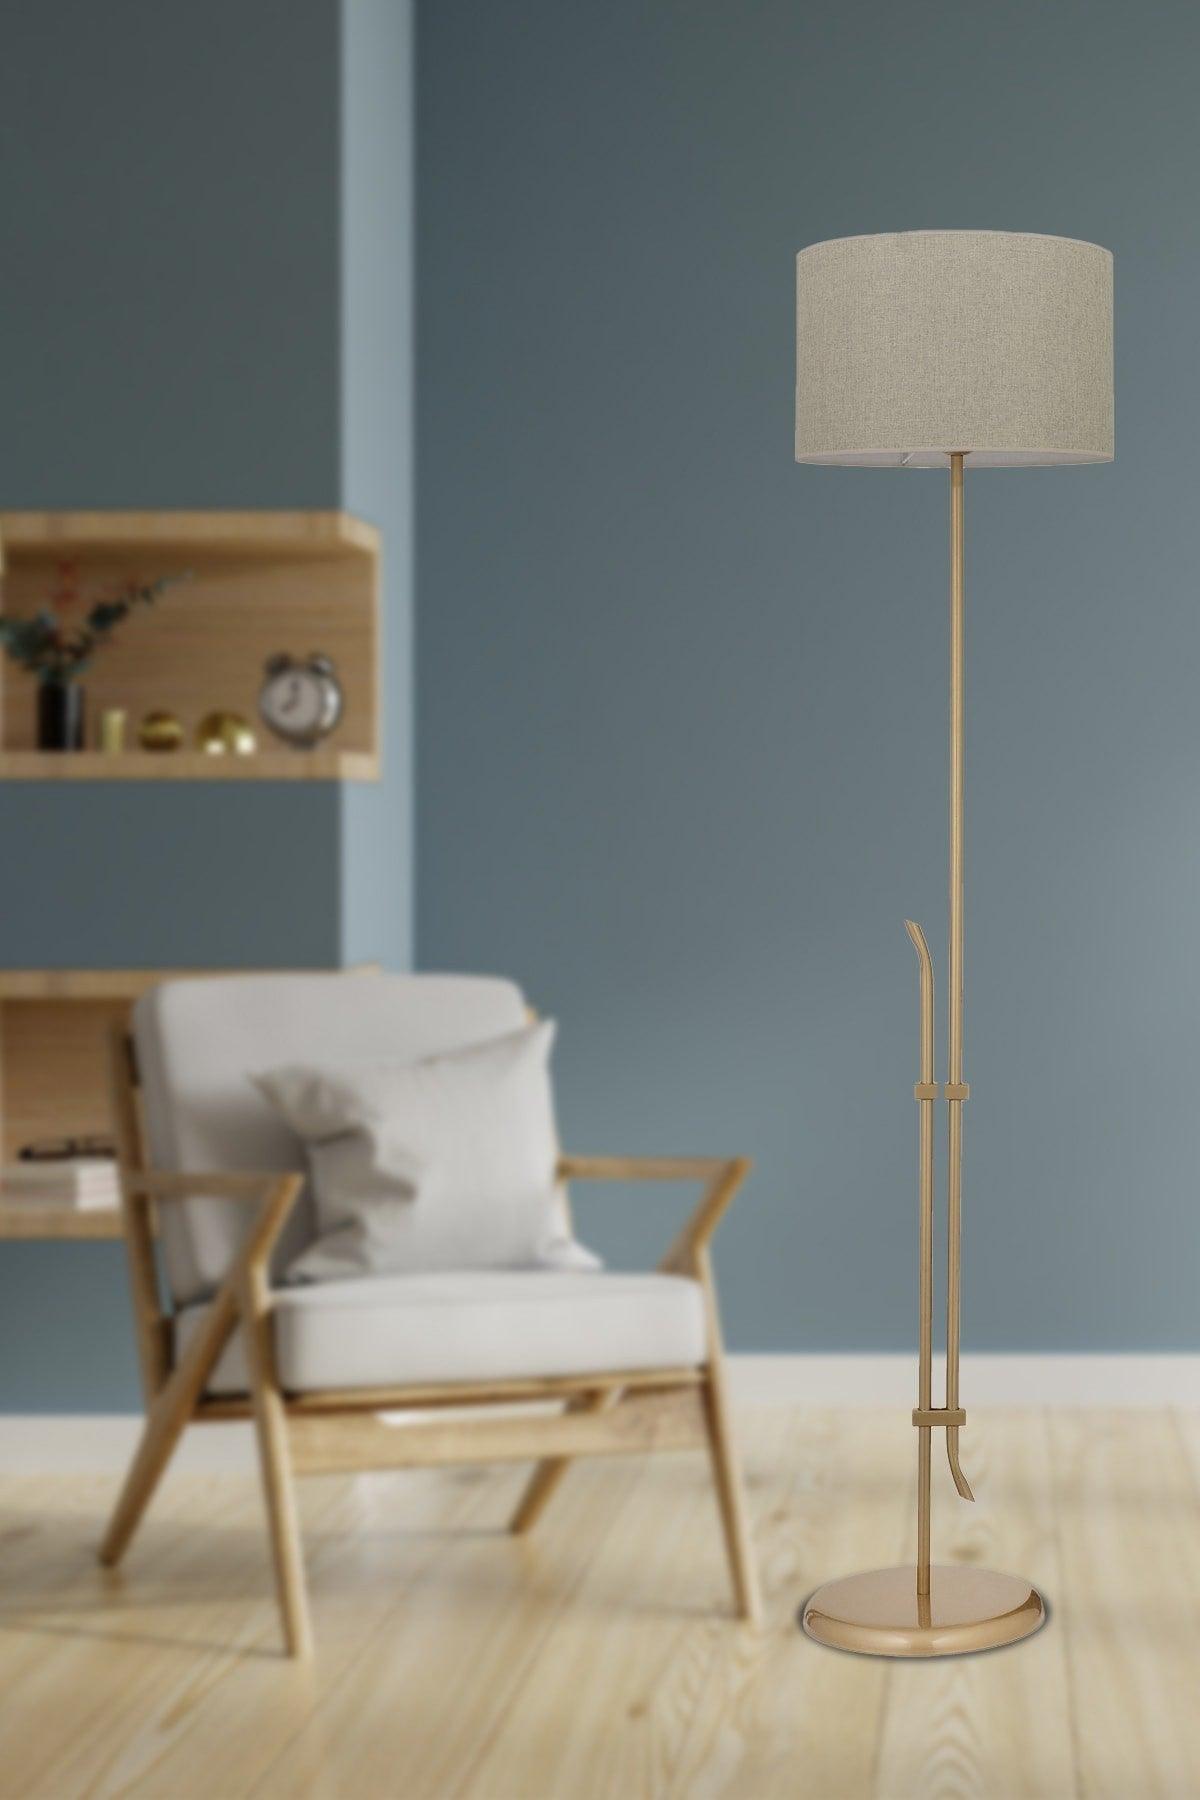 Tumbled Modern Design Standing Lampshade Lamp Metal Floor Lamp With Jolly Tumbled Hat - Swordslife